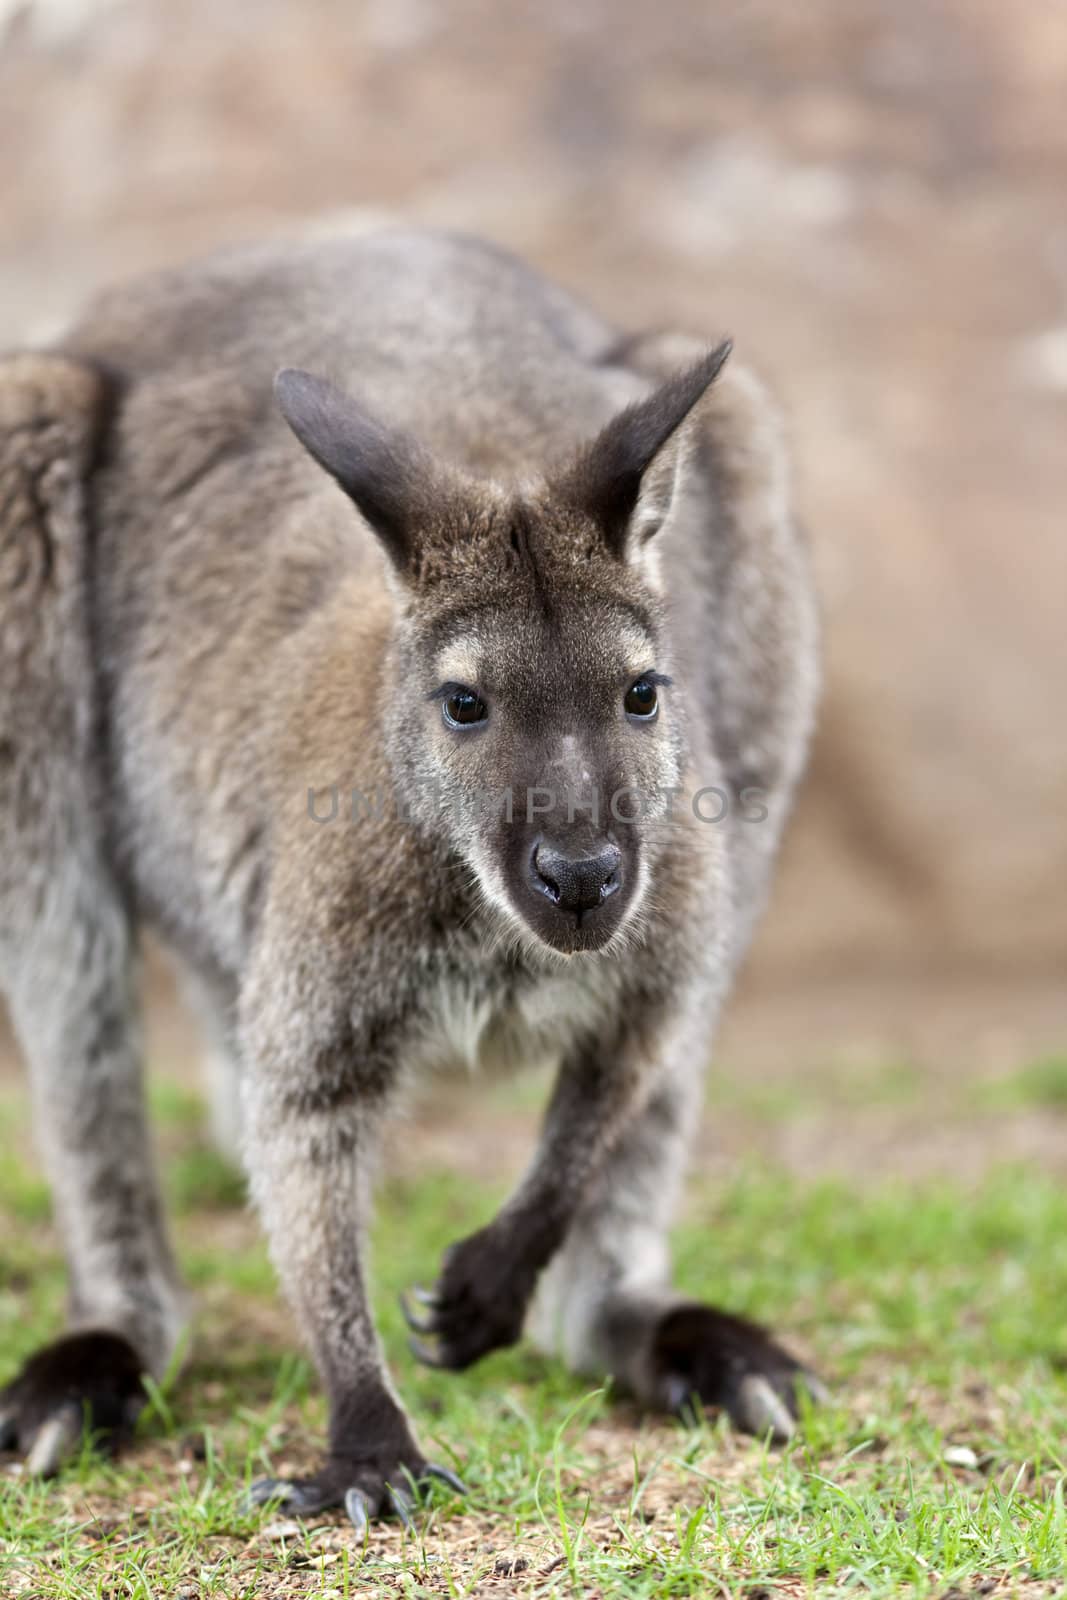 A close up shot of a wallaby